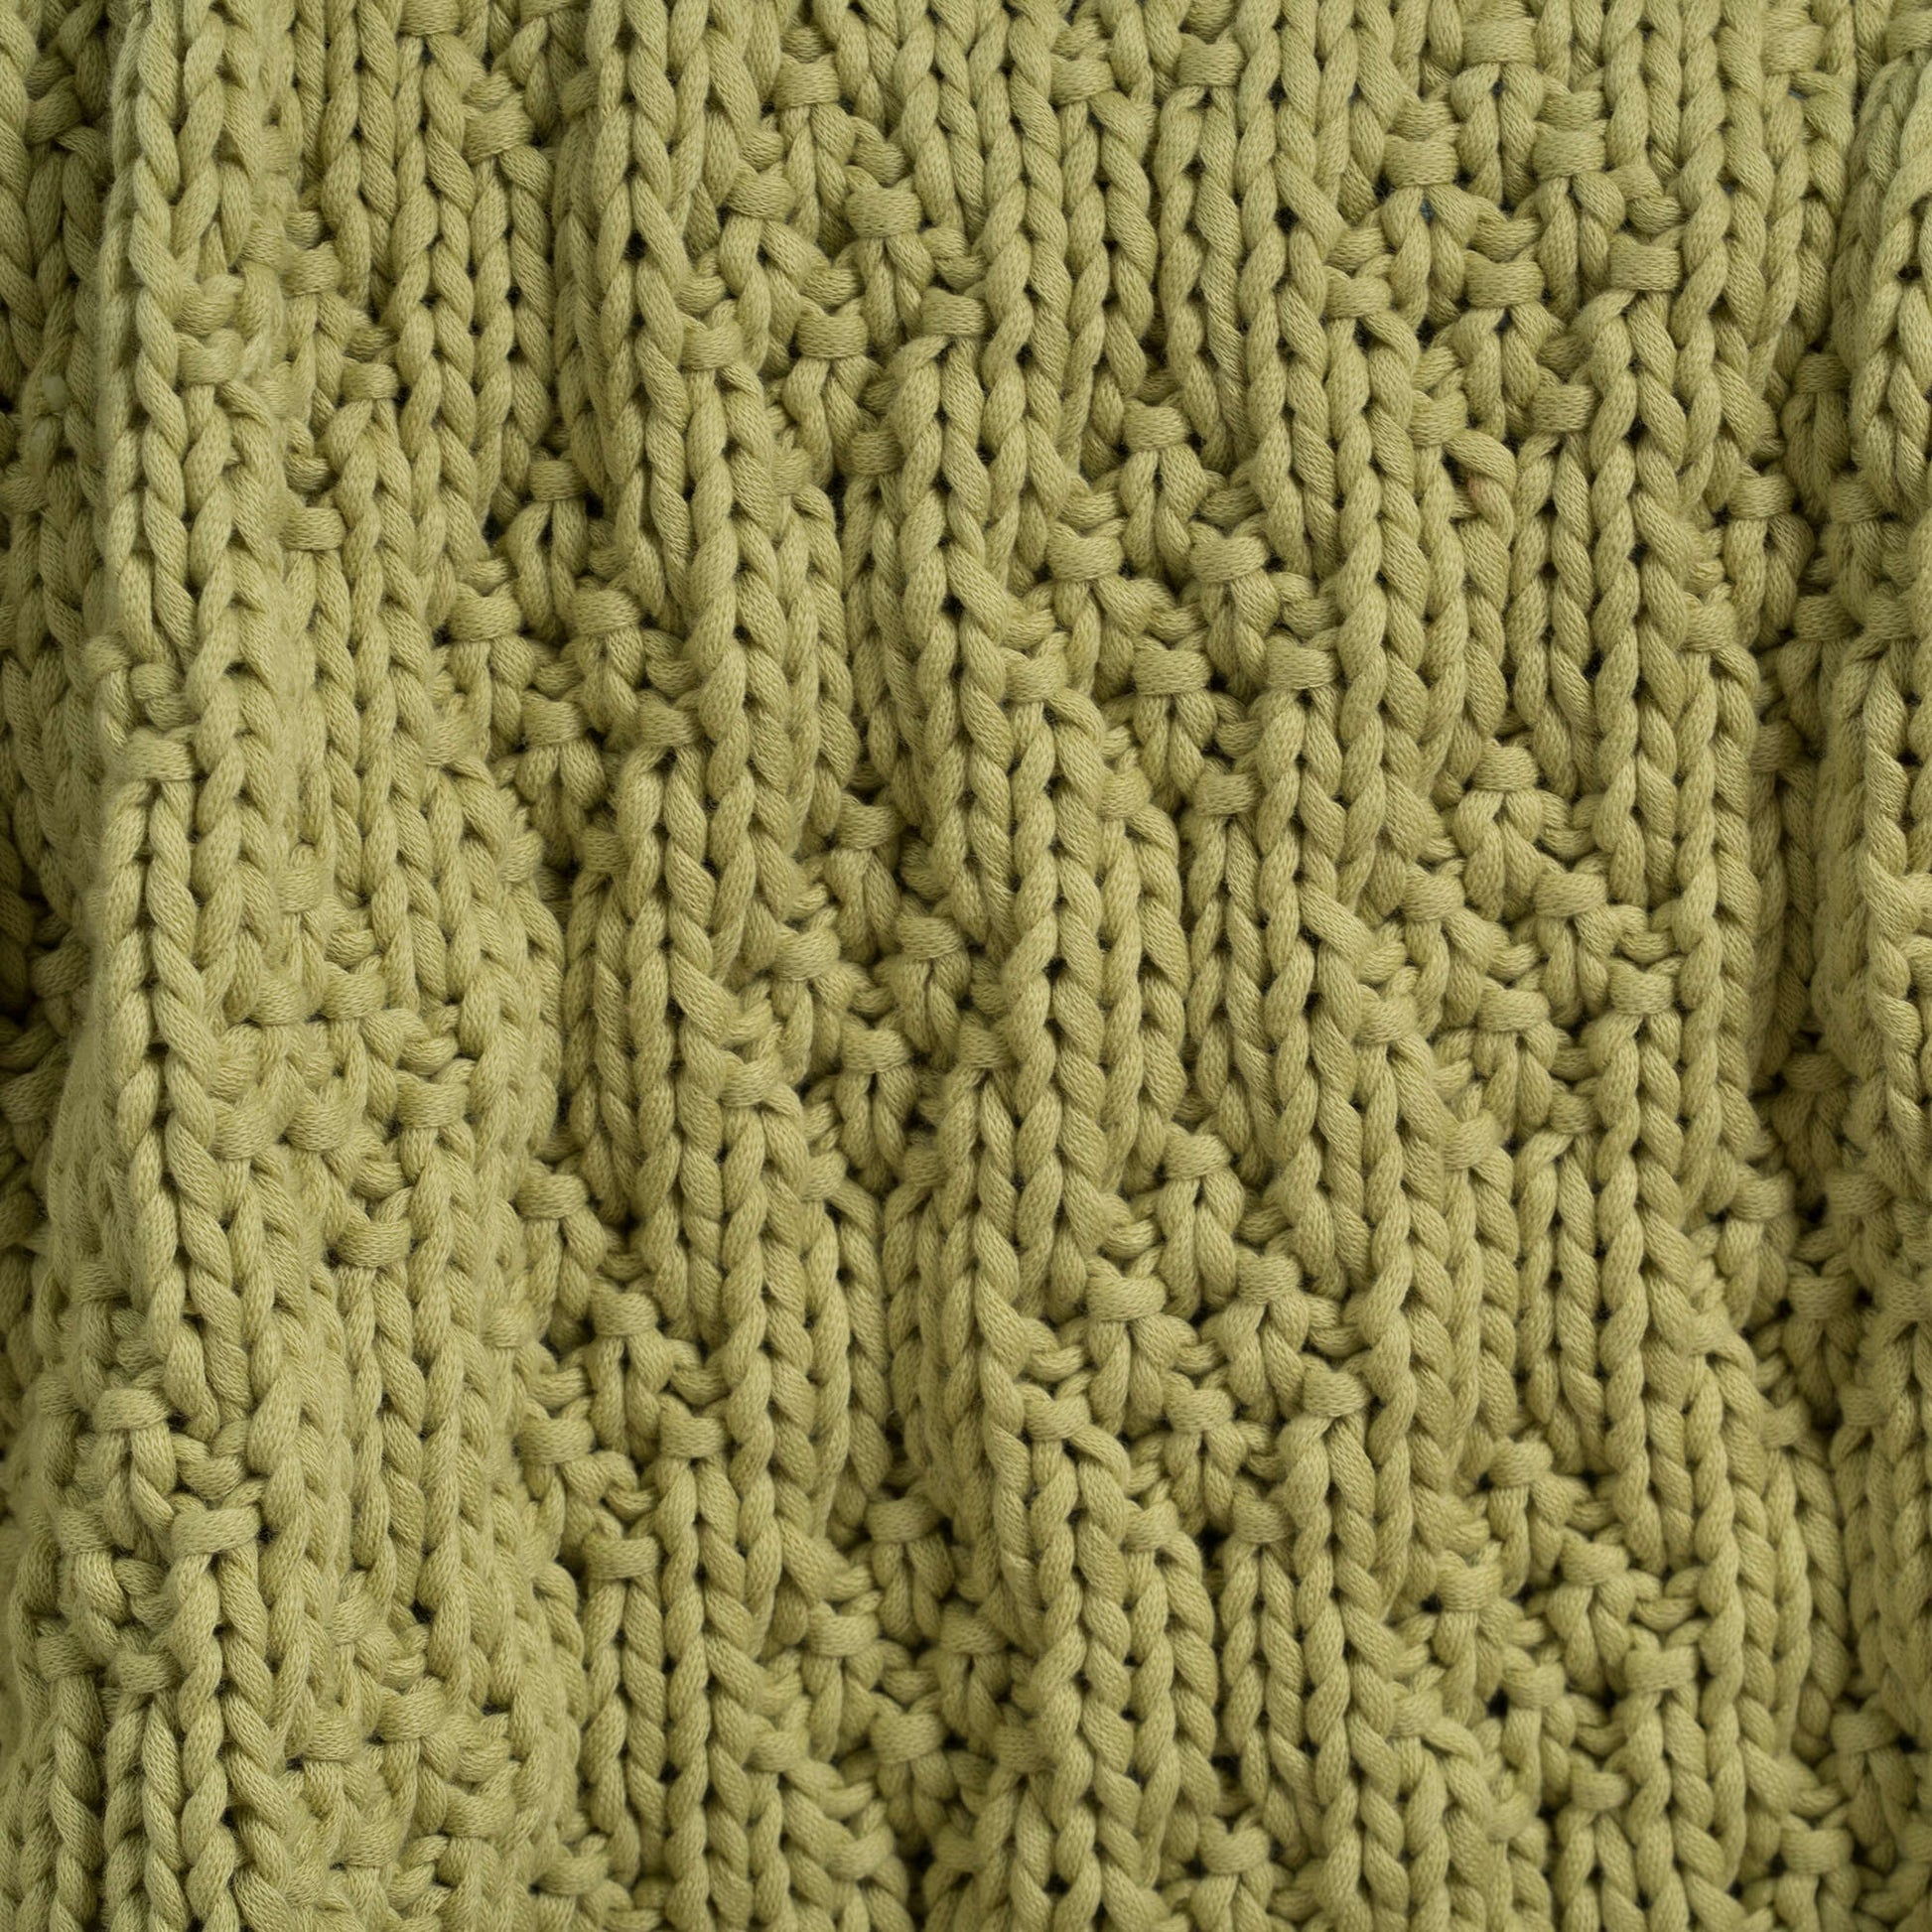 Free Bernat Tasty Textures Knit Blanket Pattern